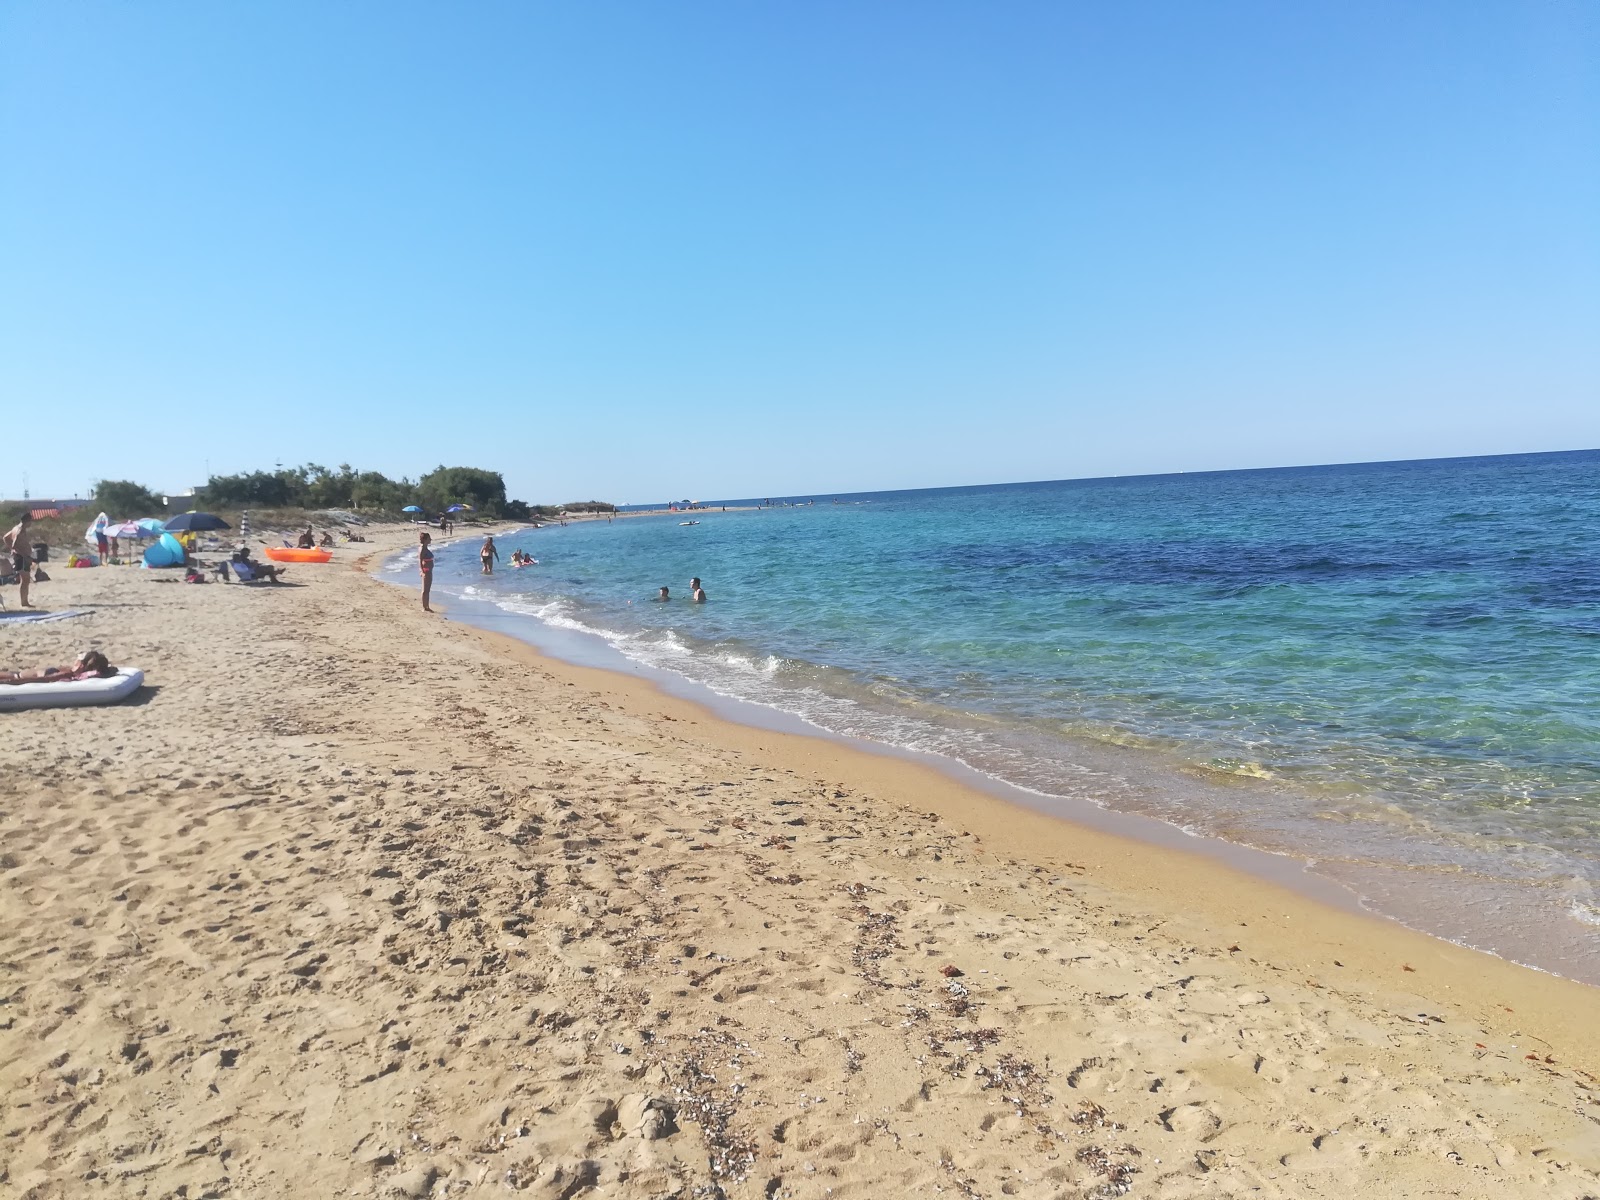 Fotografie cu Chianca beach cu nivelul de curățenie in medie